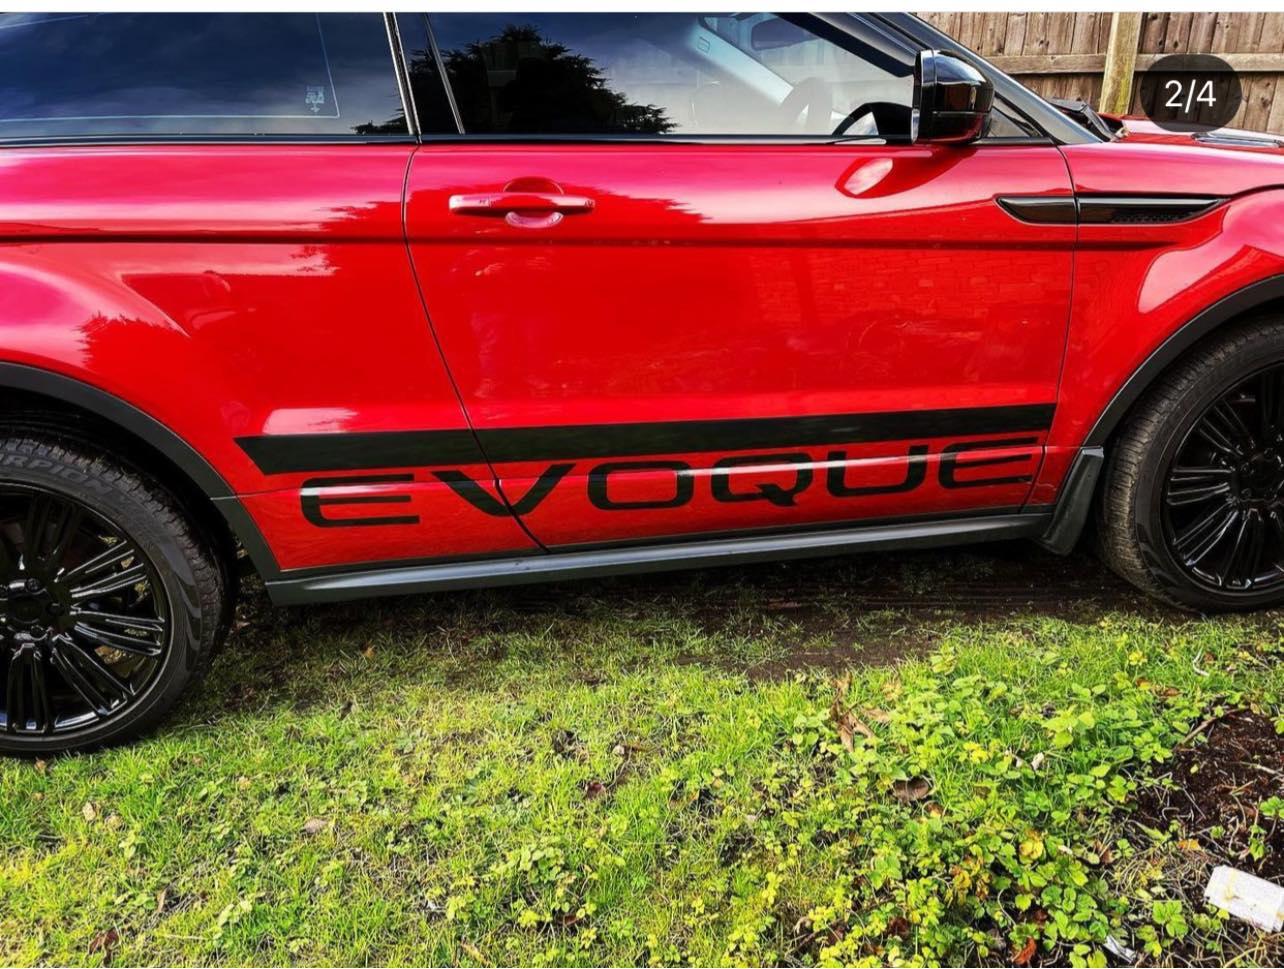 Range Rover Evoque 2018 Side Stripes - rewrapsandgraphics